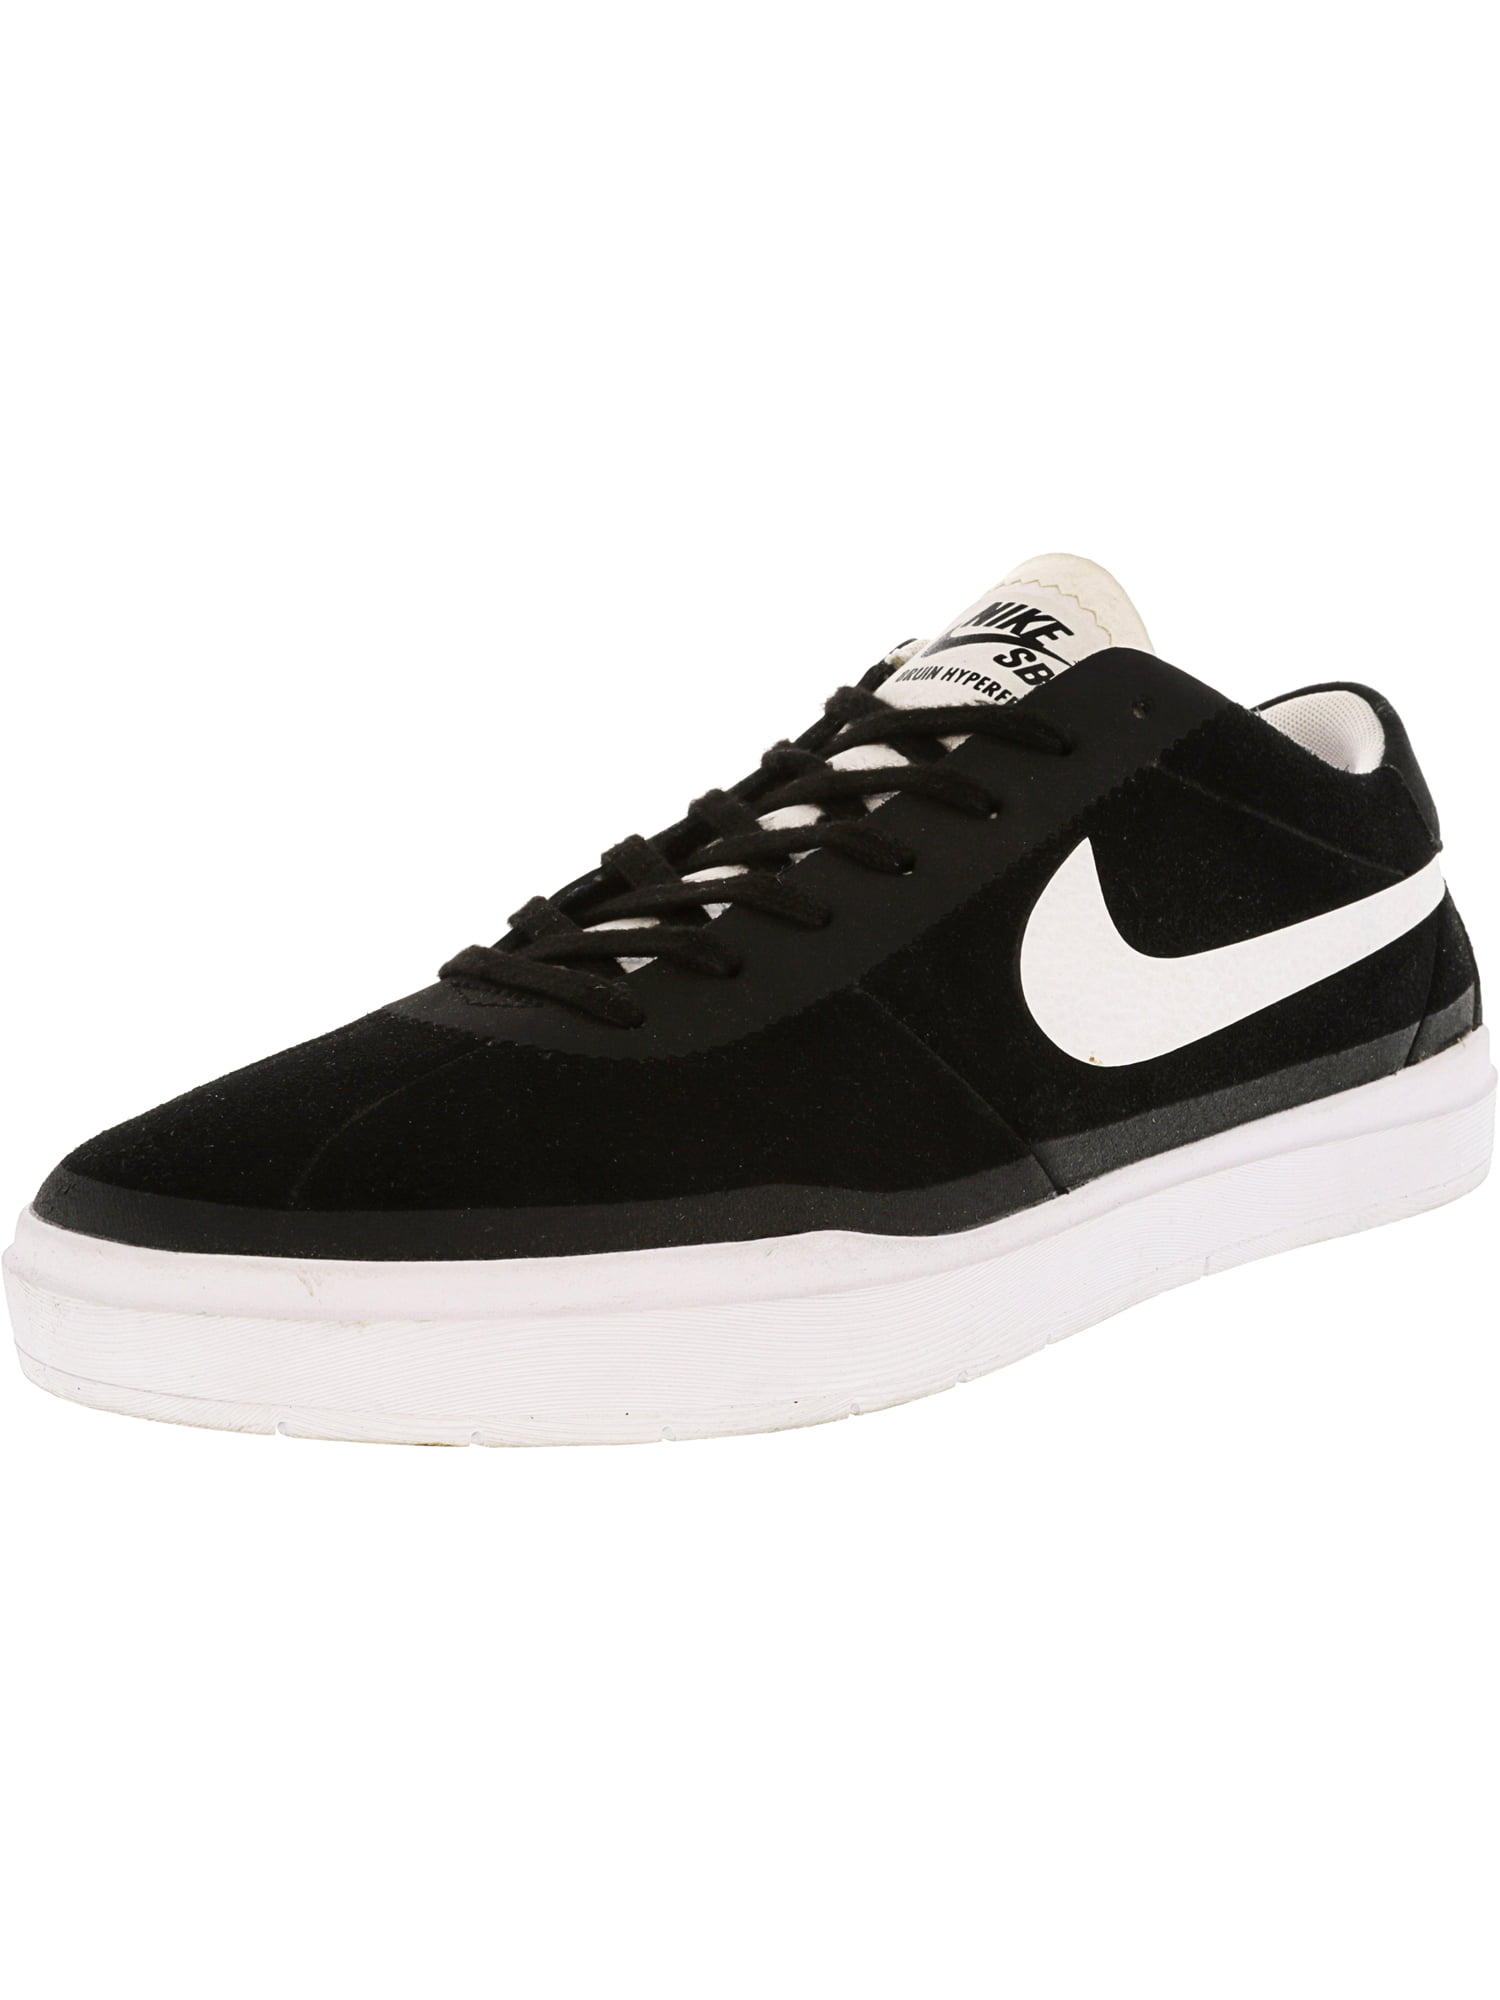 Derivar Masaccio granja Nike Men's Sb Bruin Hyperfeel Black / White Ankle-High Suede Skateboarding  Shoe - 9M - Walmart.com